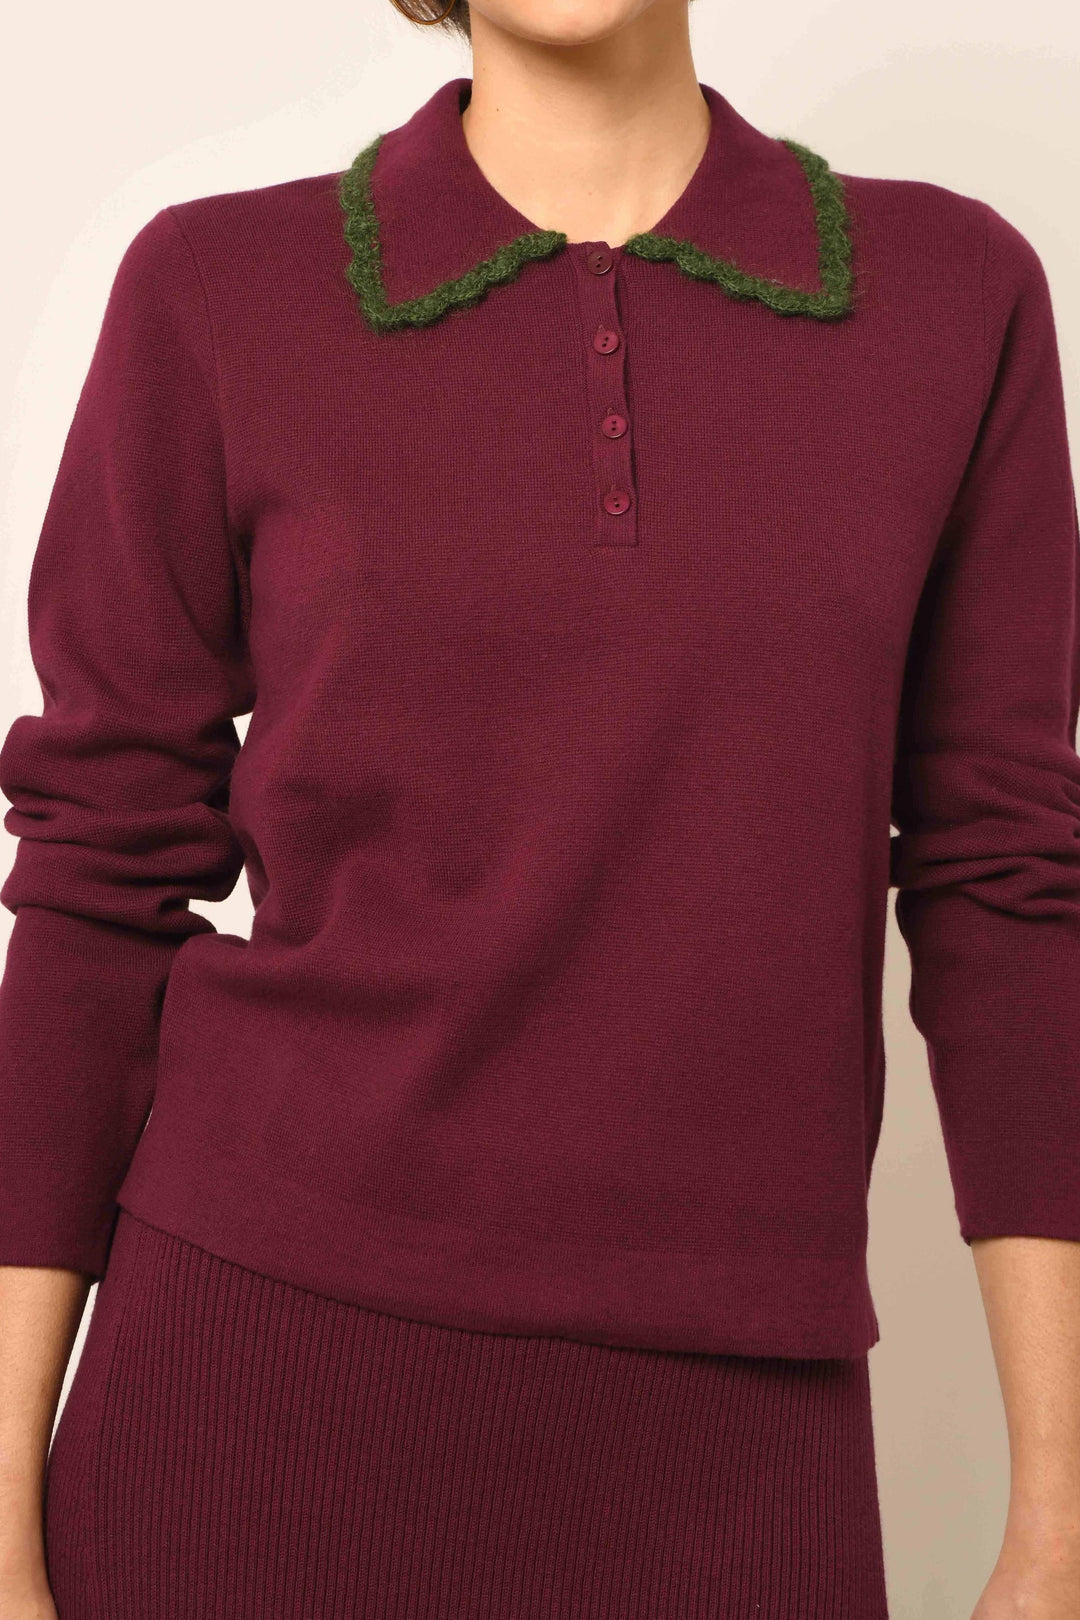 Montrey Sweater - Cramberry - S